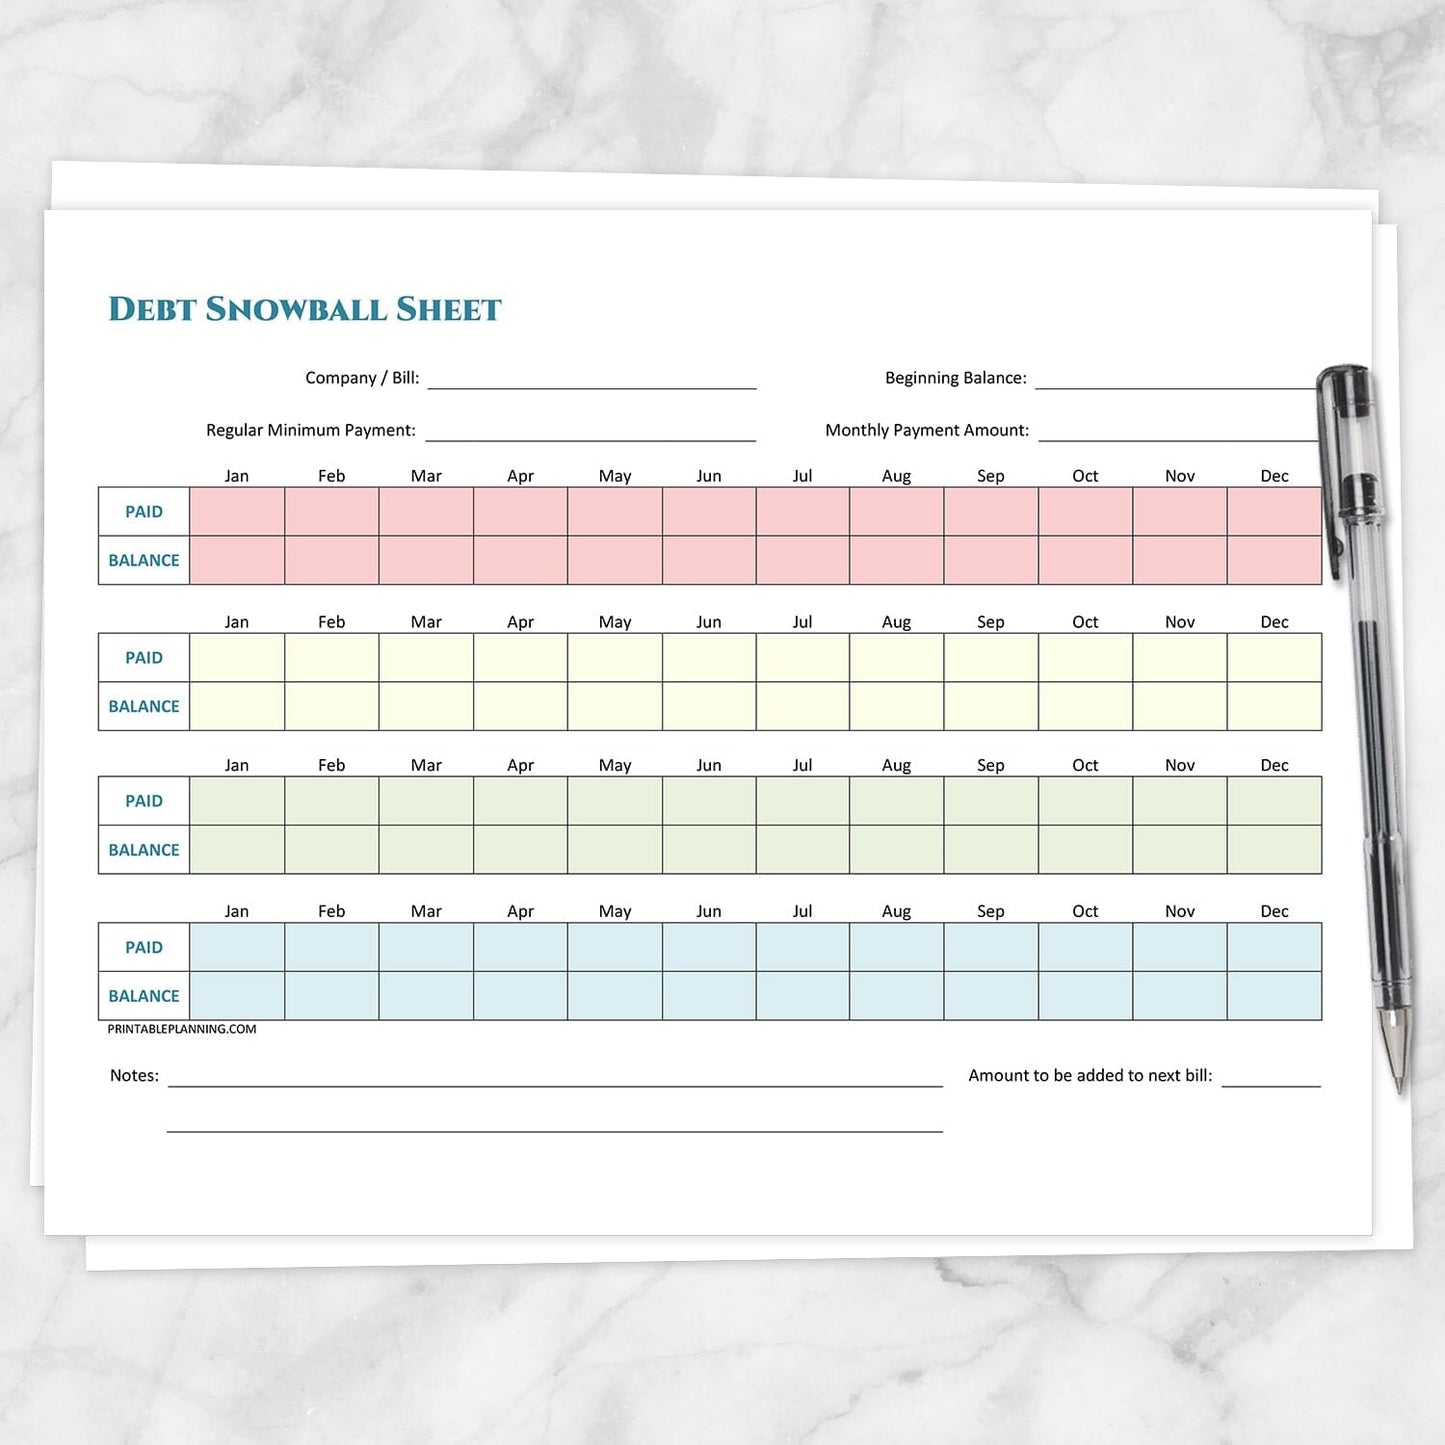 Printable Debt Snowball Sheet and Debt Payoff Plan - BUNDLE at Printable Planning